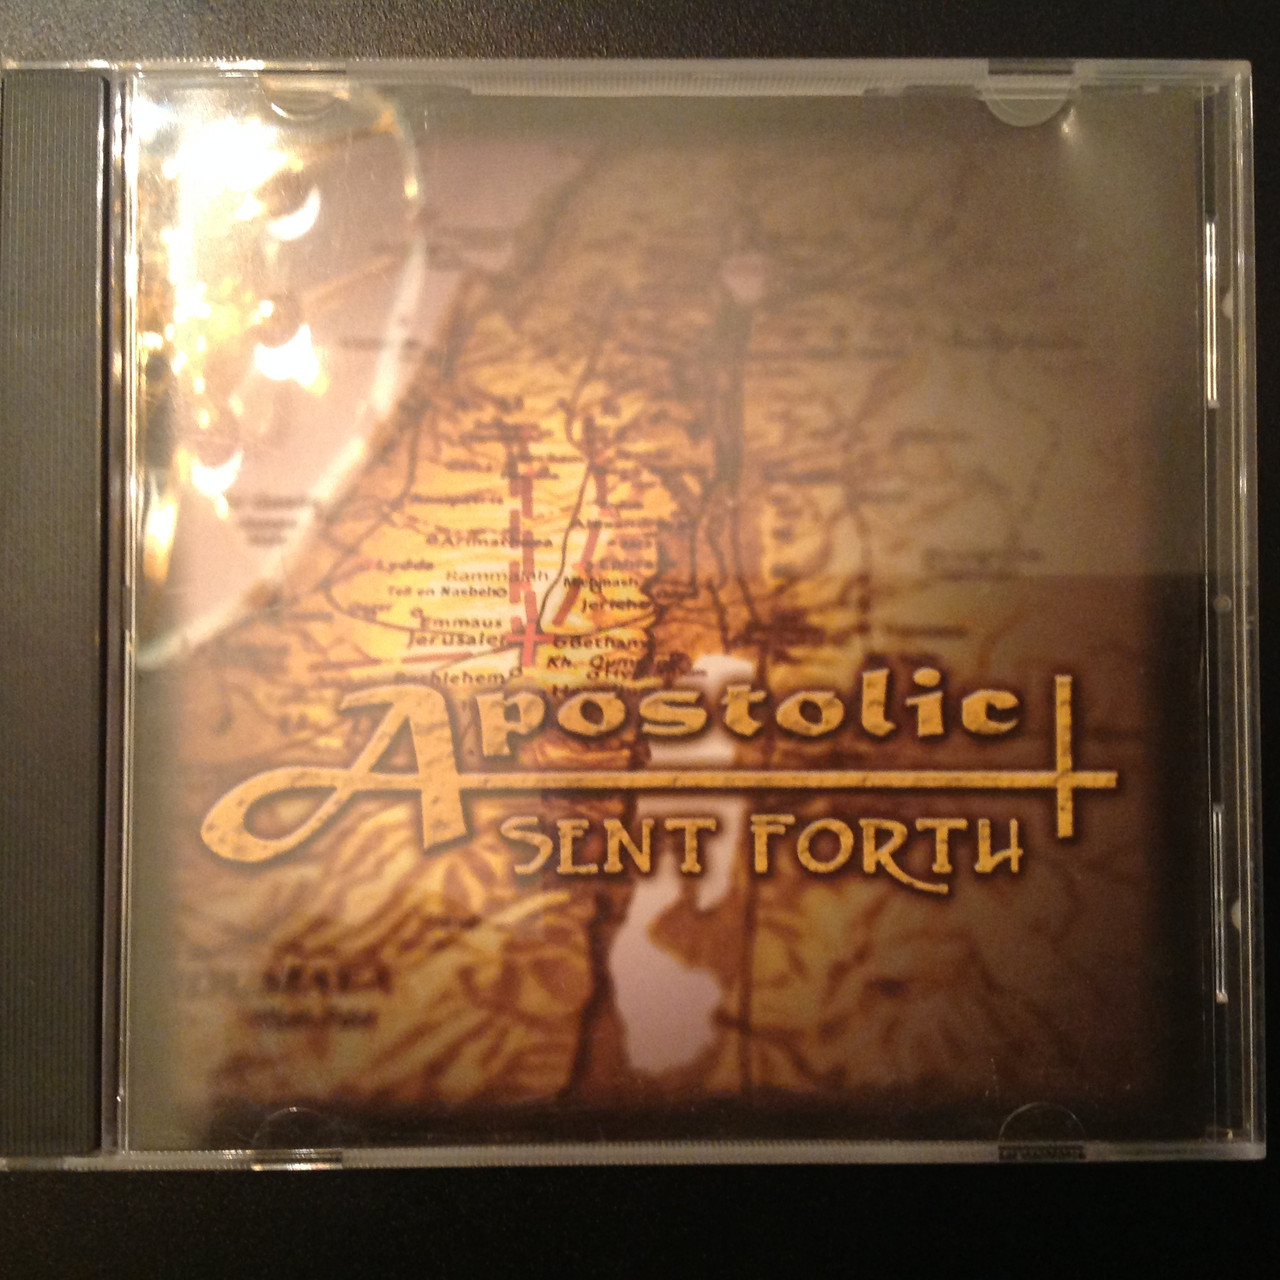 Sent Forth by Apostolic CD